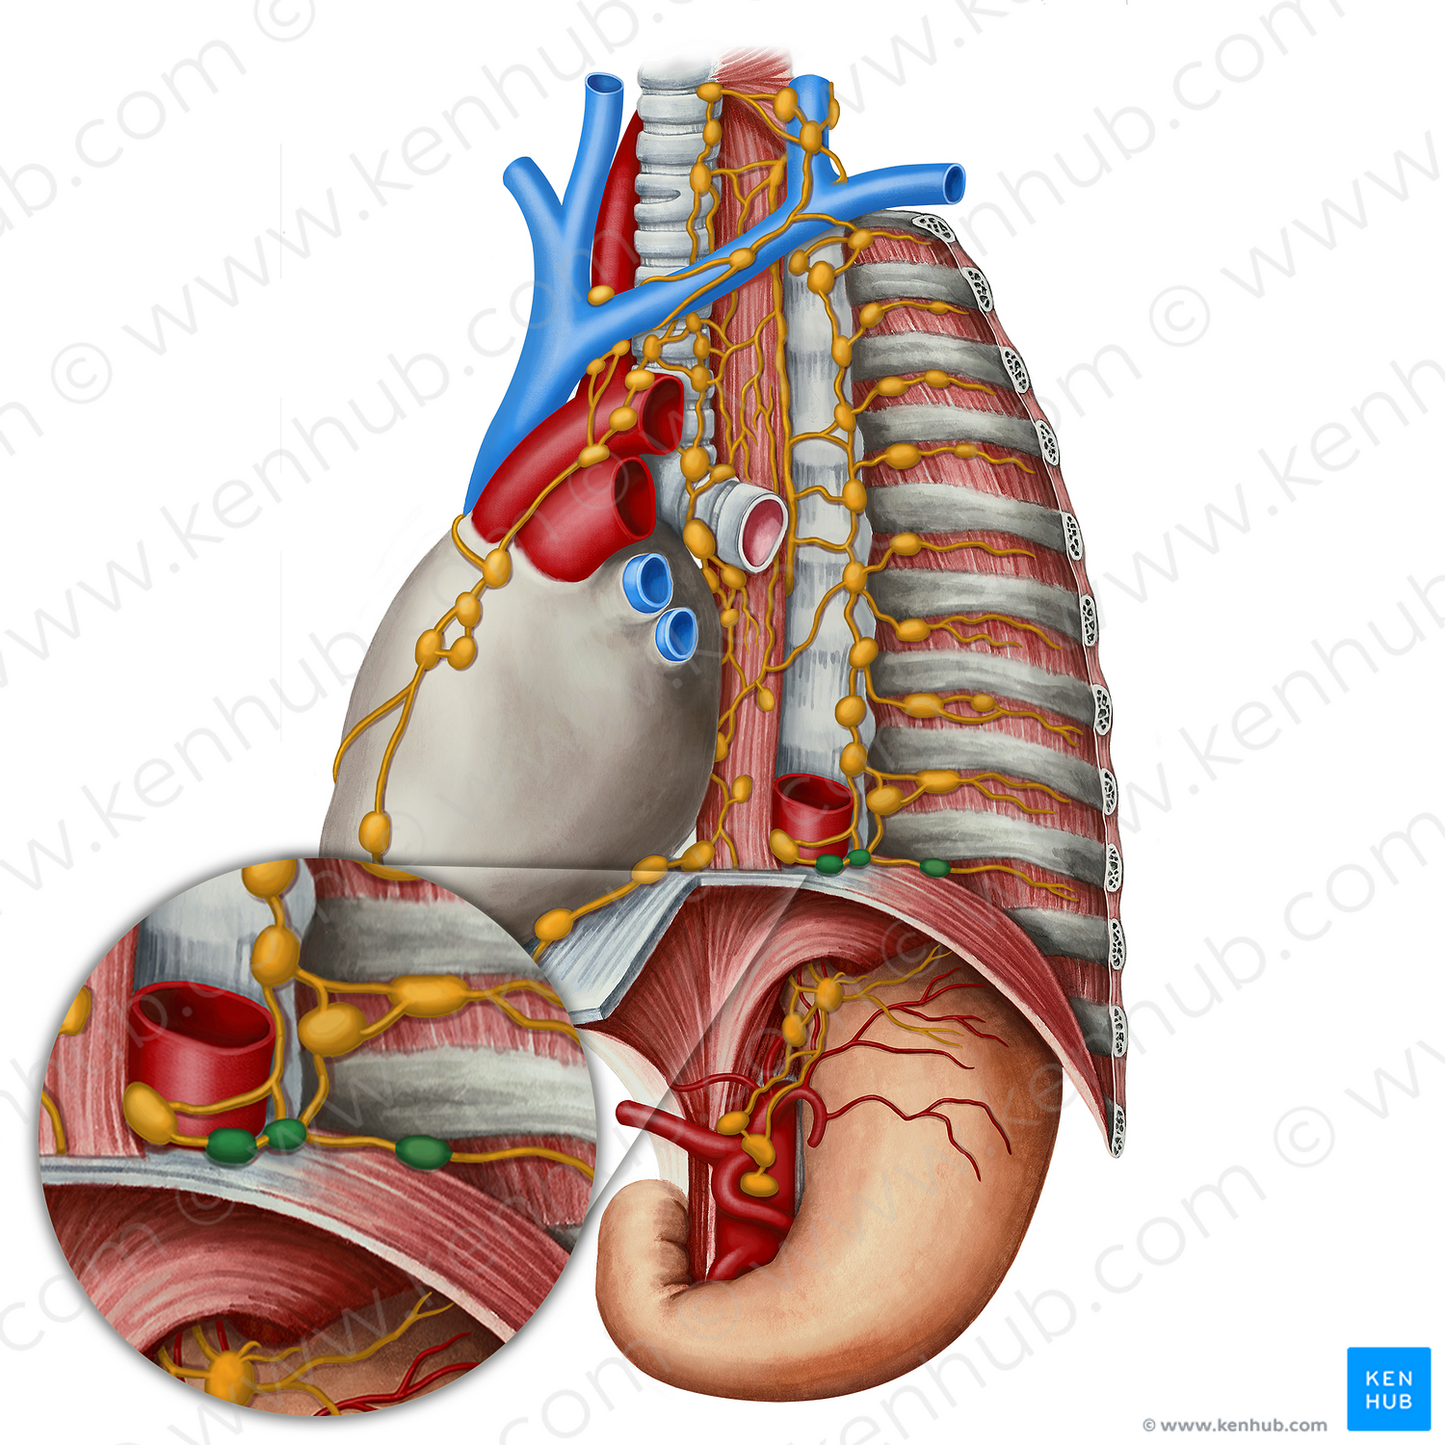 Superior diaphragmatic lymph nodes (#7087)